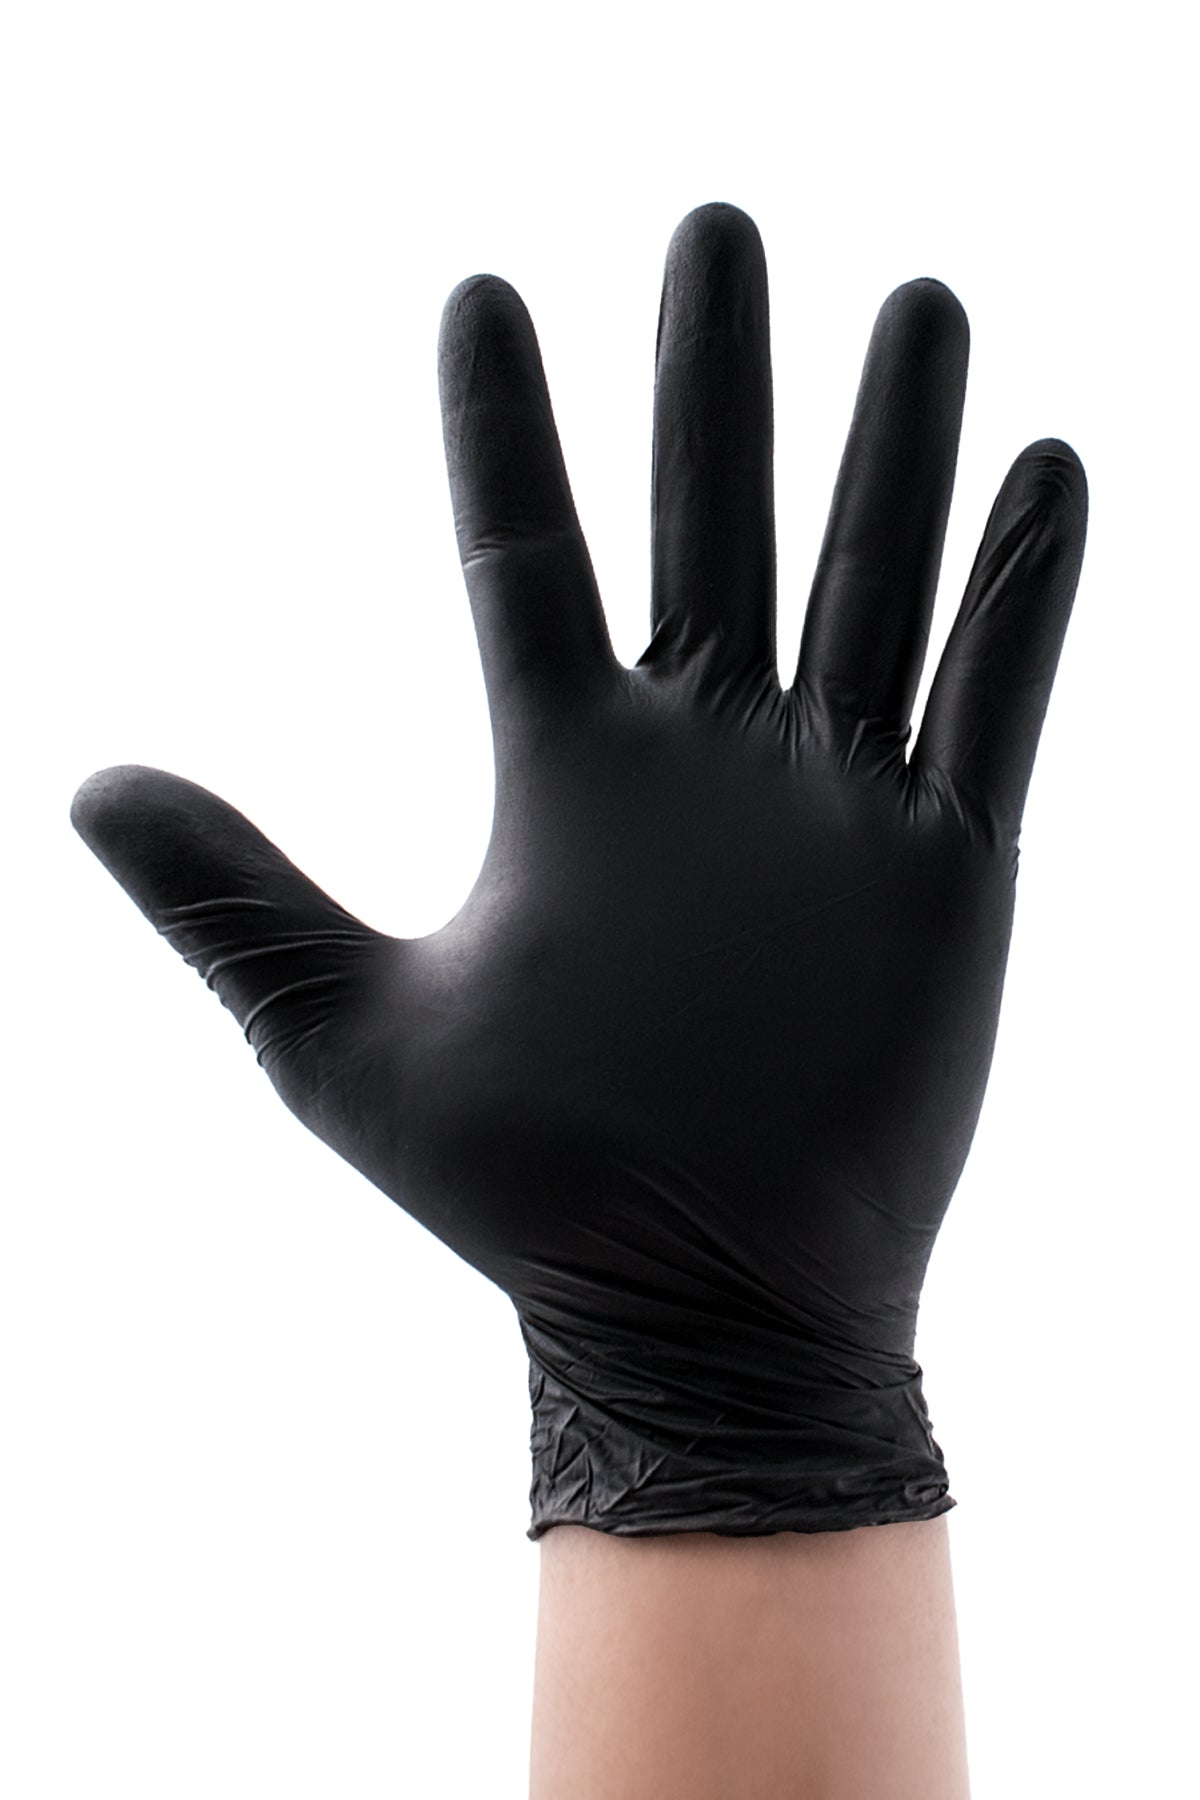 The Barber Gloves - Nitrile Black 100pk